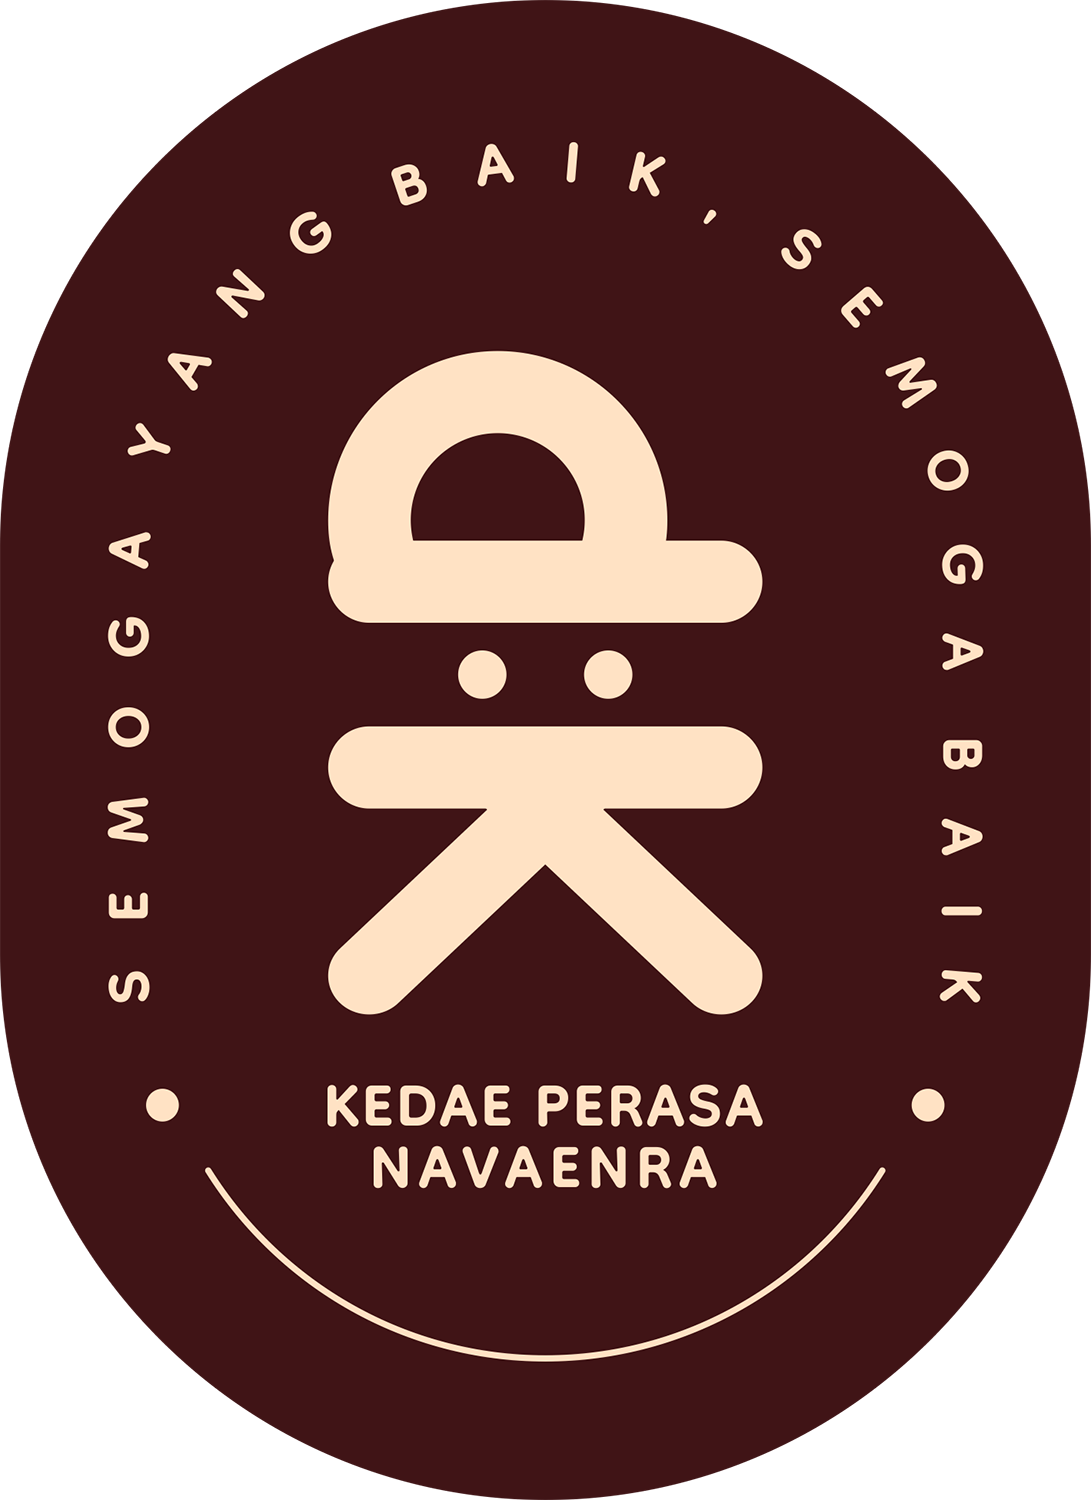 Kedaeperasa Logo